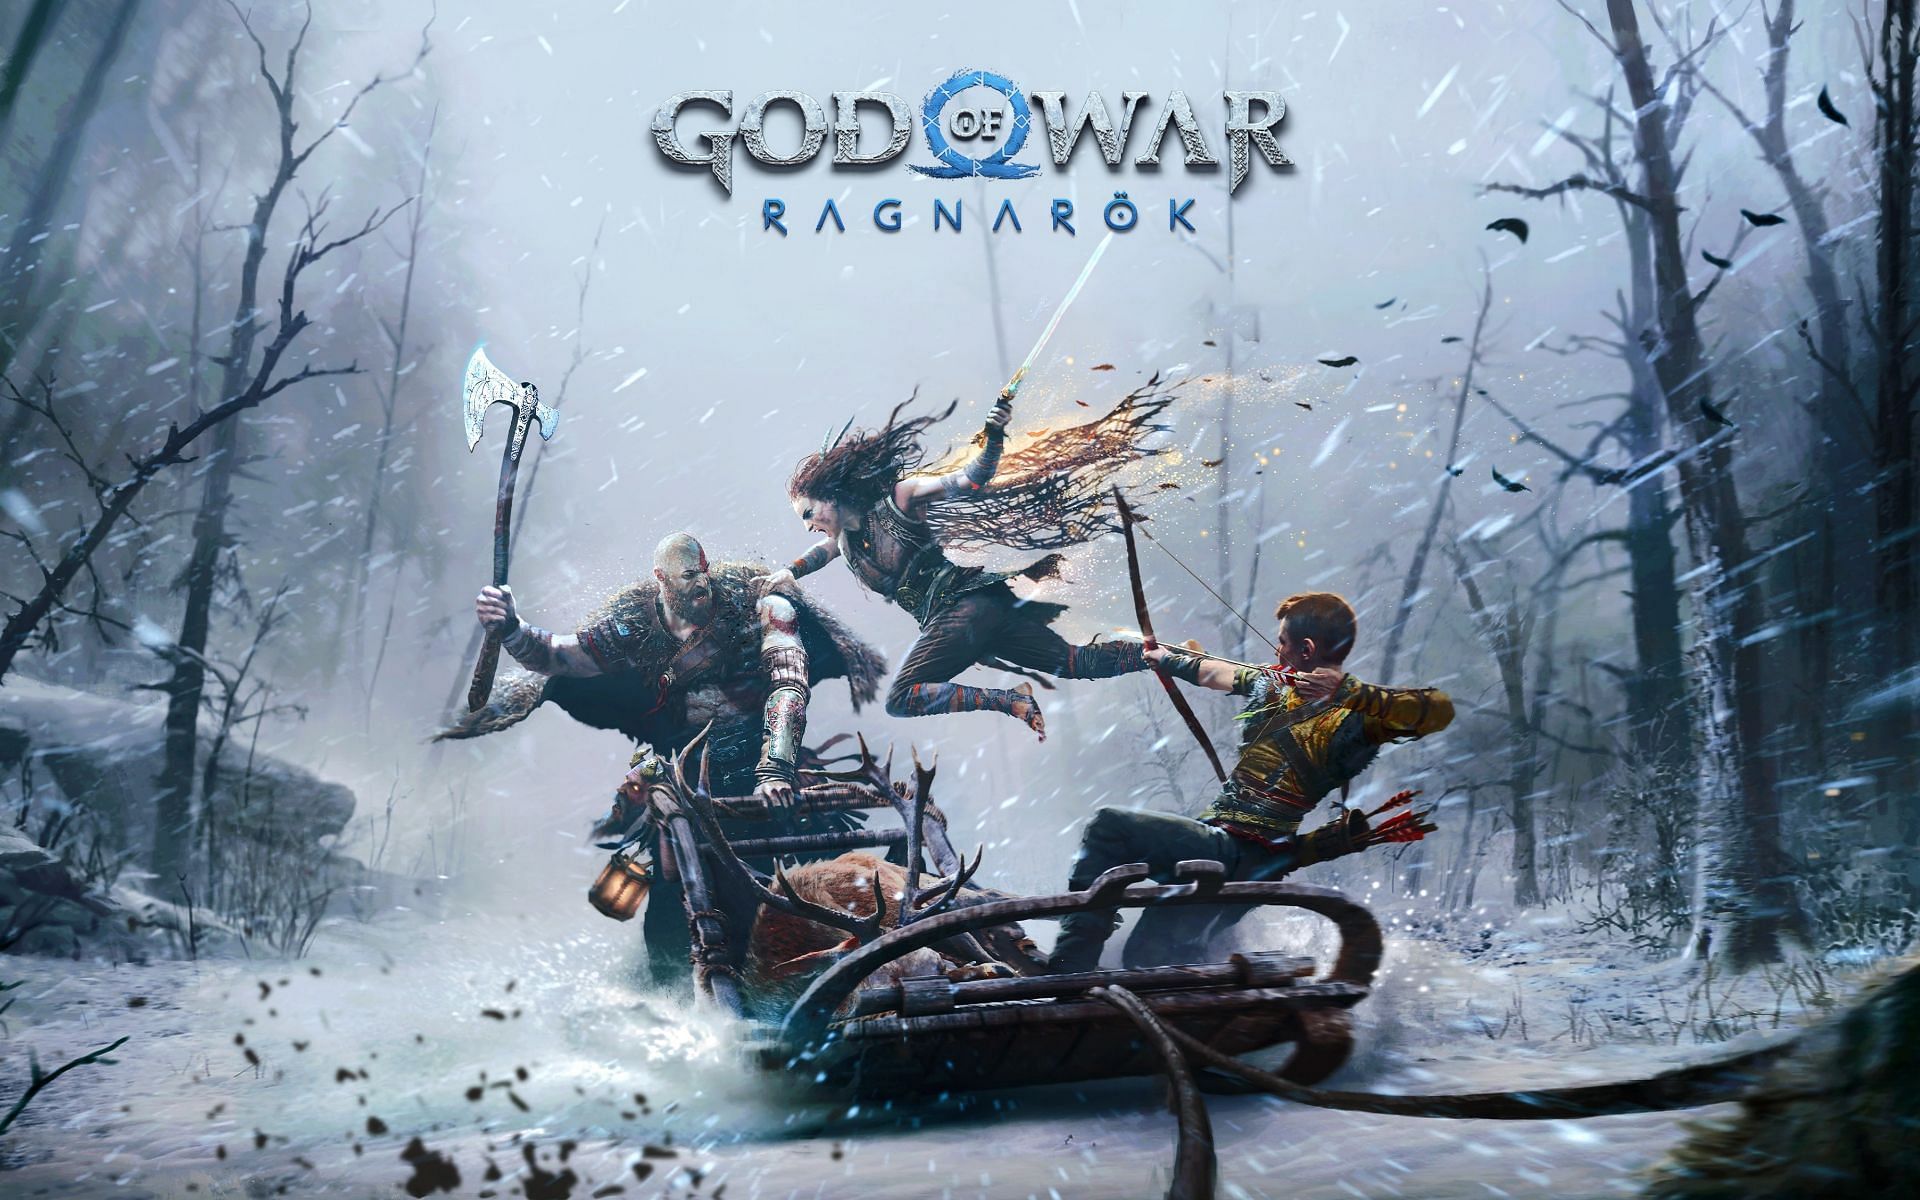 God of War Ragnarök - Combat and Enemies Elevated